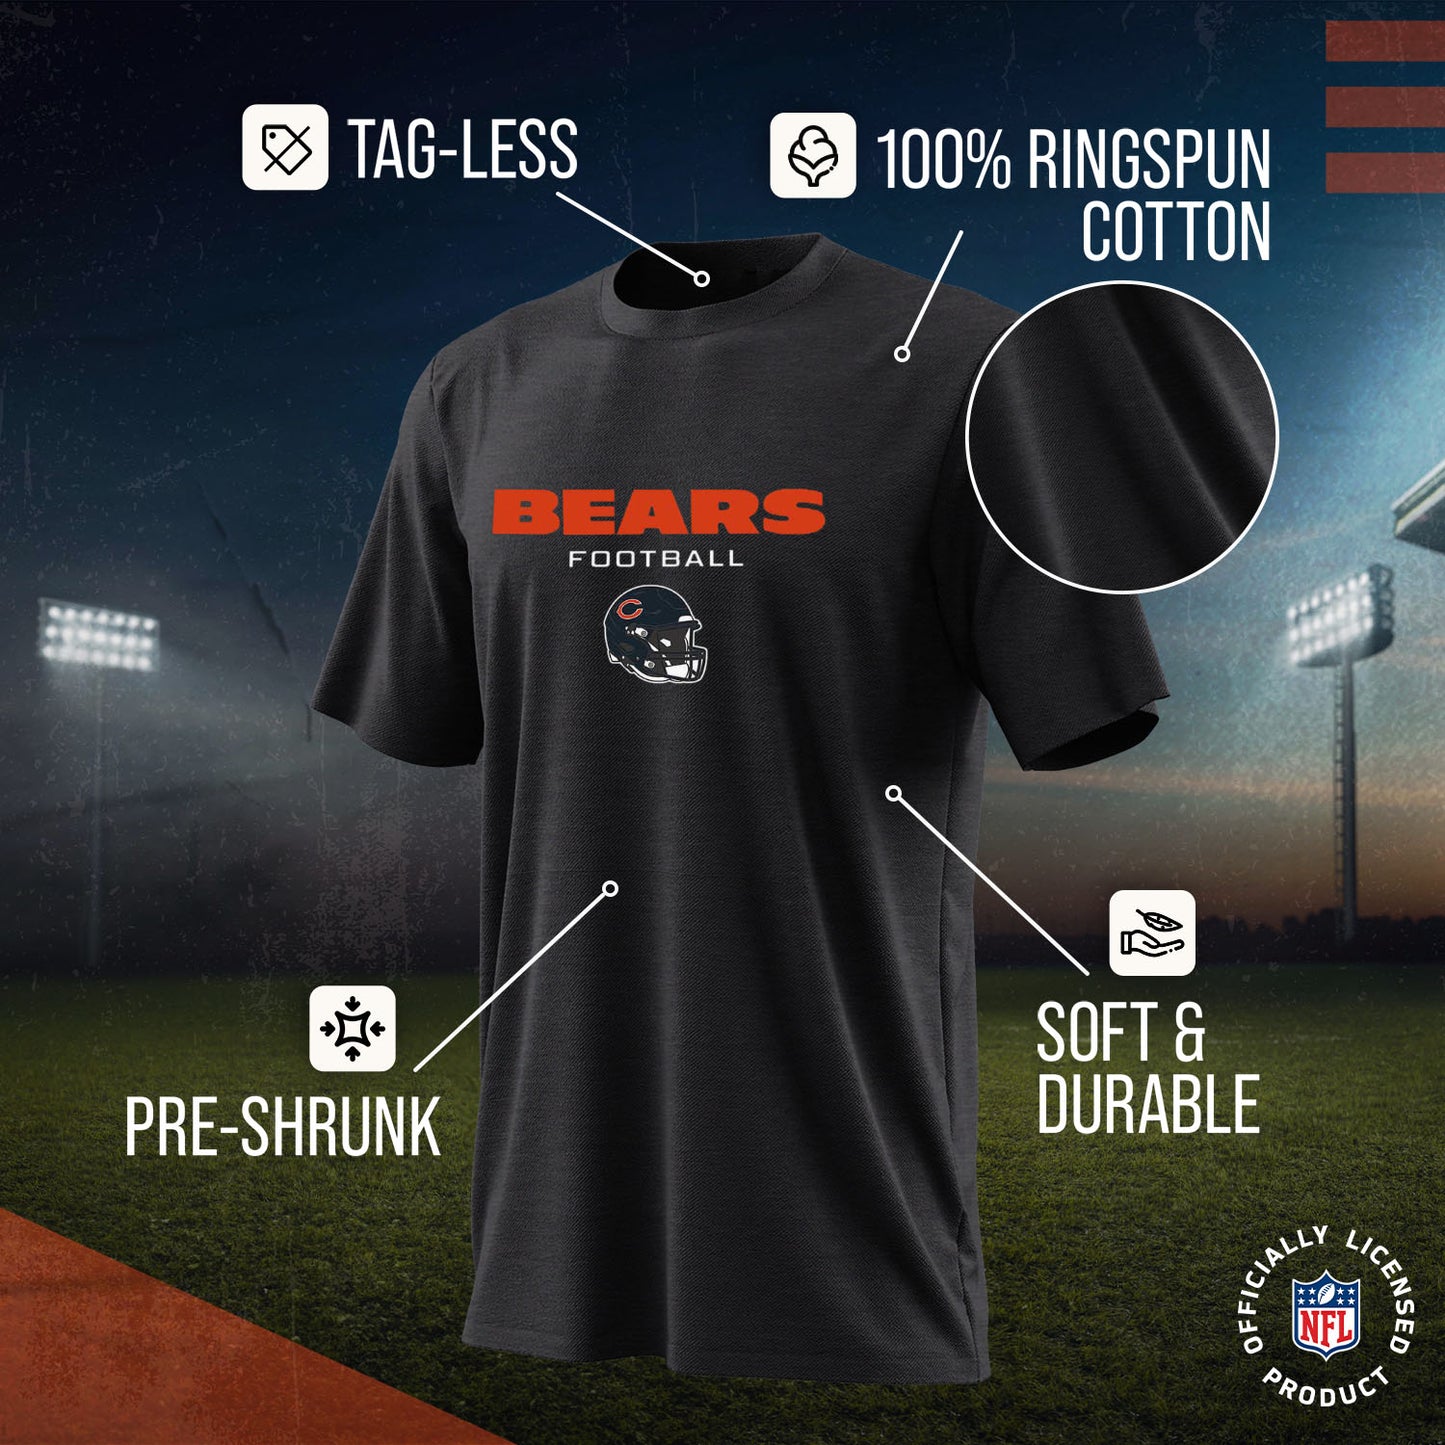 Chicago Bears NFL Adult Football Helmet Tagless T-Shirt - Charcoal